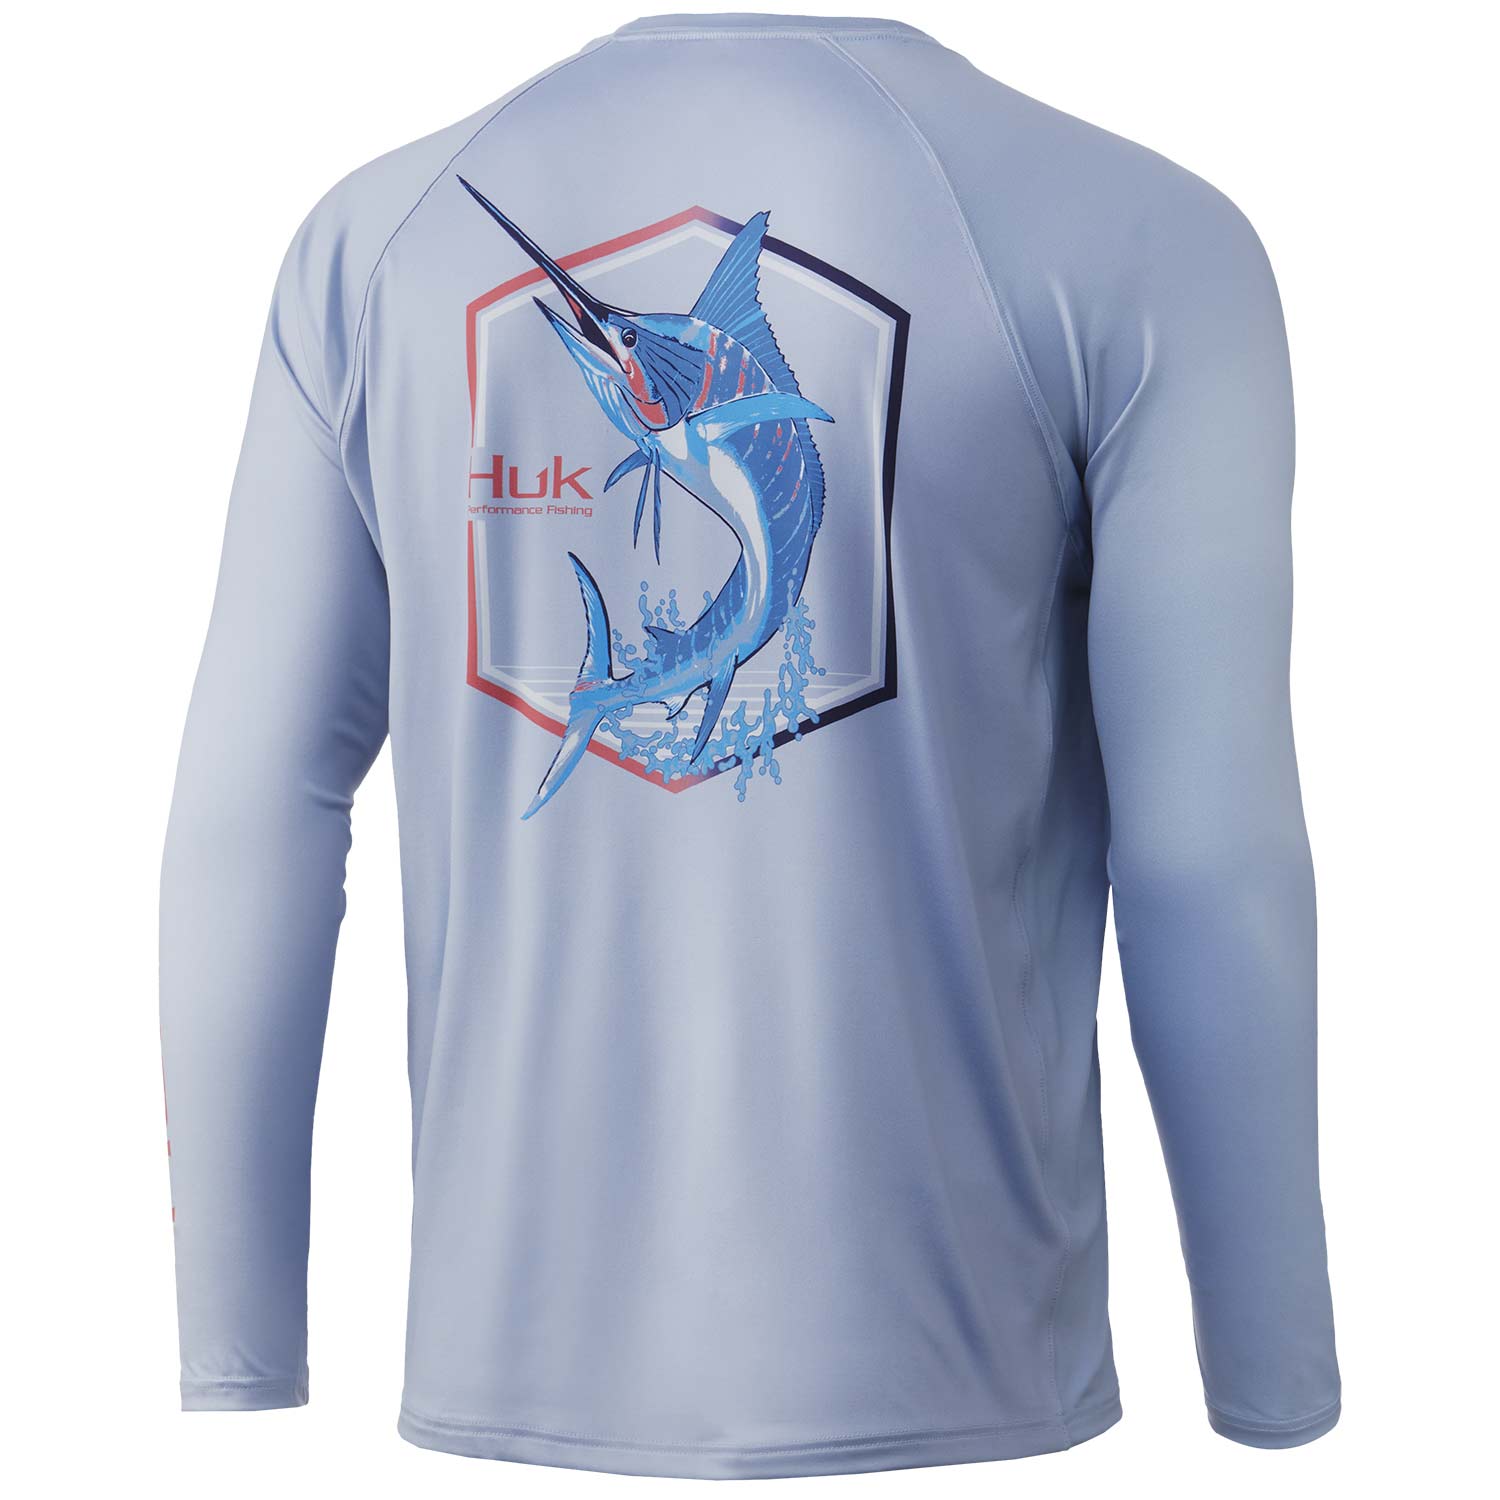 HUK Men's Angry Marlin Pursuit Shirt